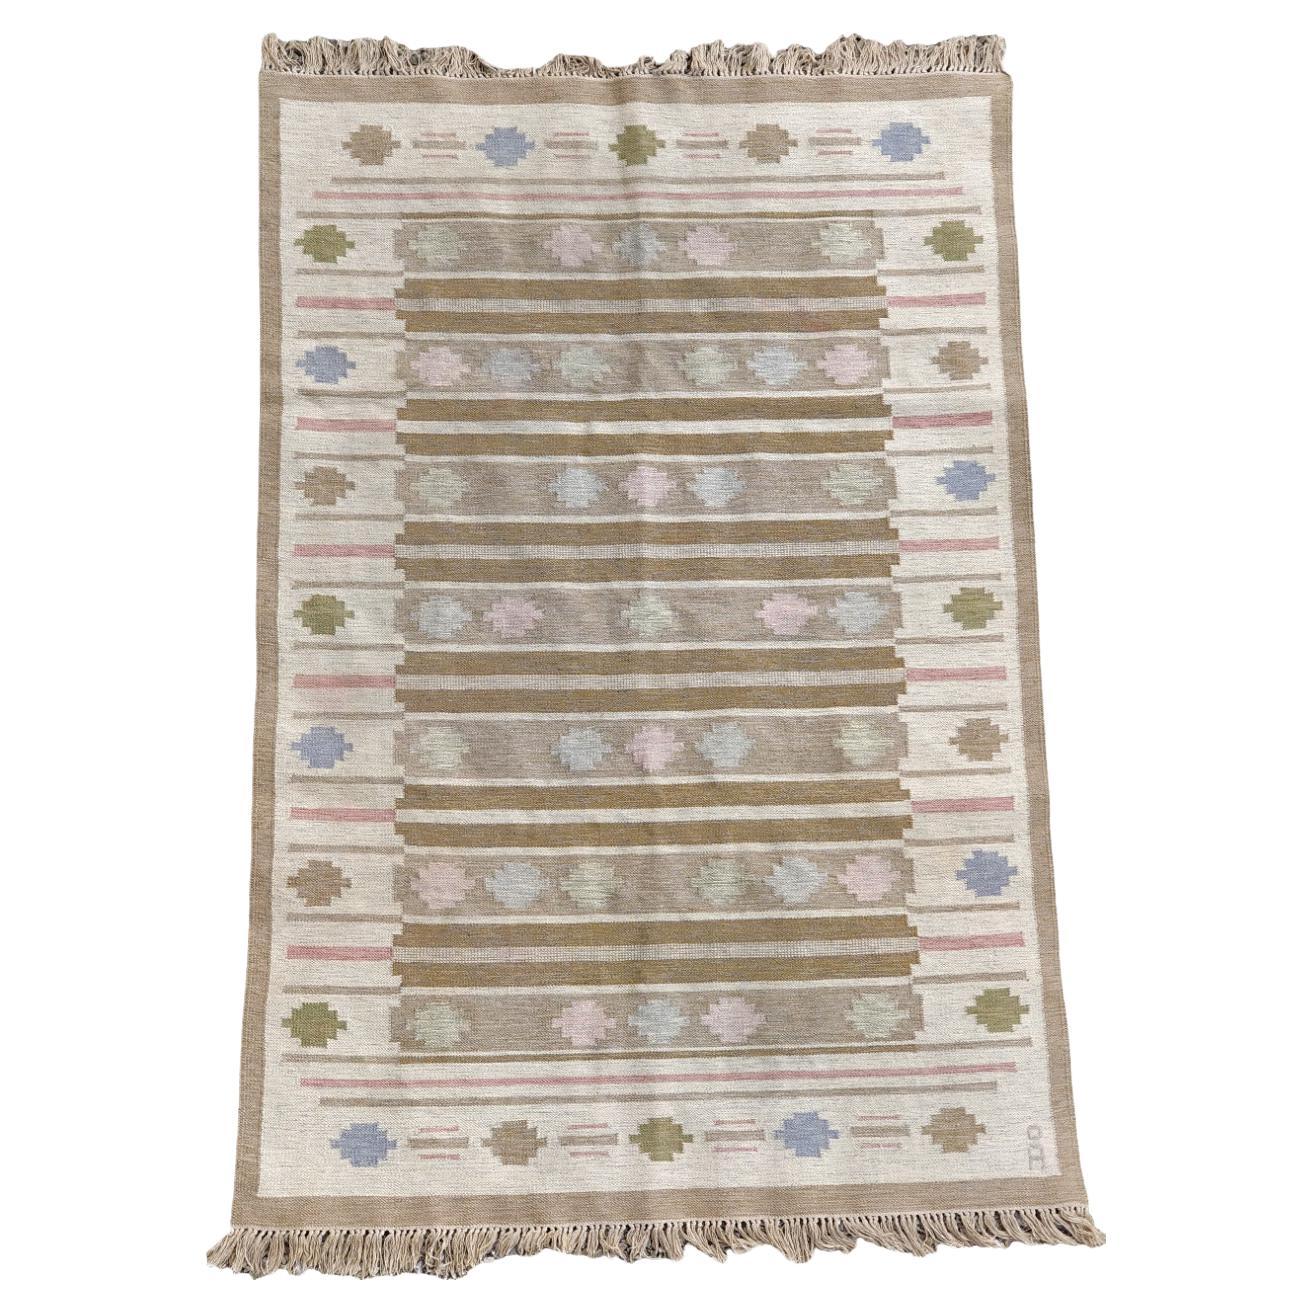  Flat-weave Kilim carpet by Swedish textile designer Anna Johanna Ångström   For Sale